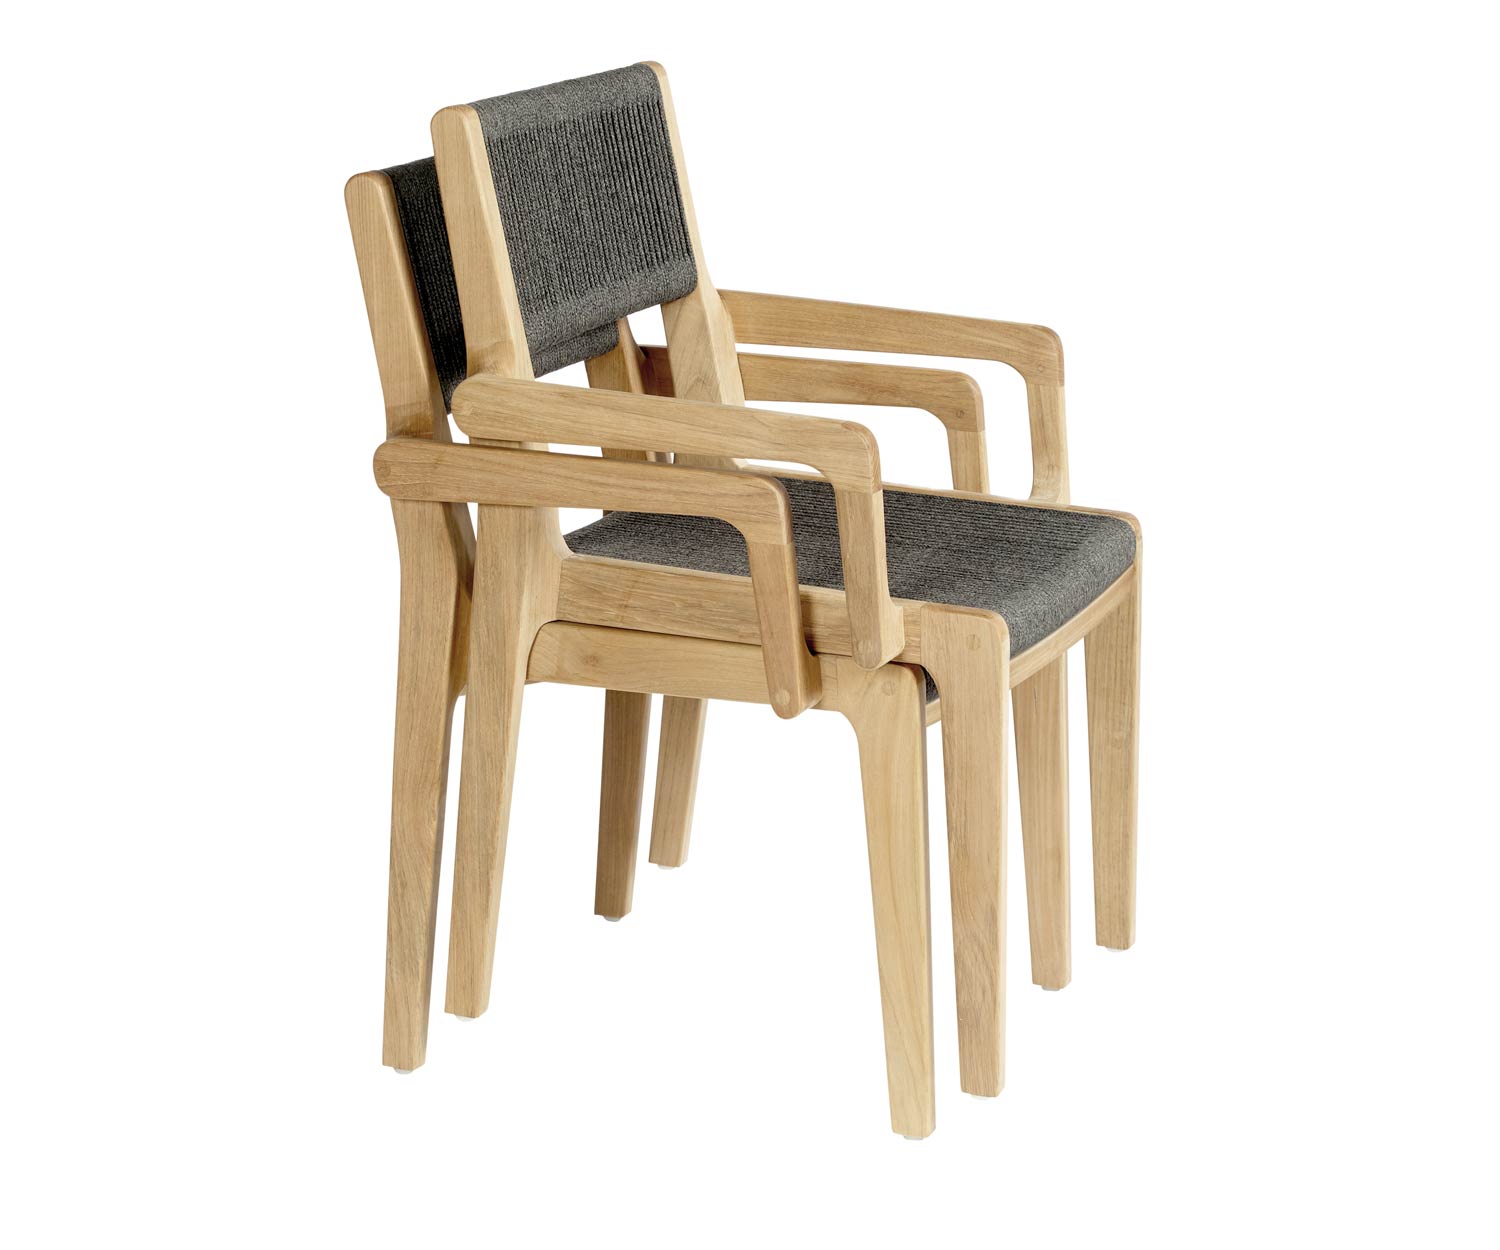 Oasiq Skagen design teakhouten fauteuil, stapelbaar